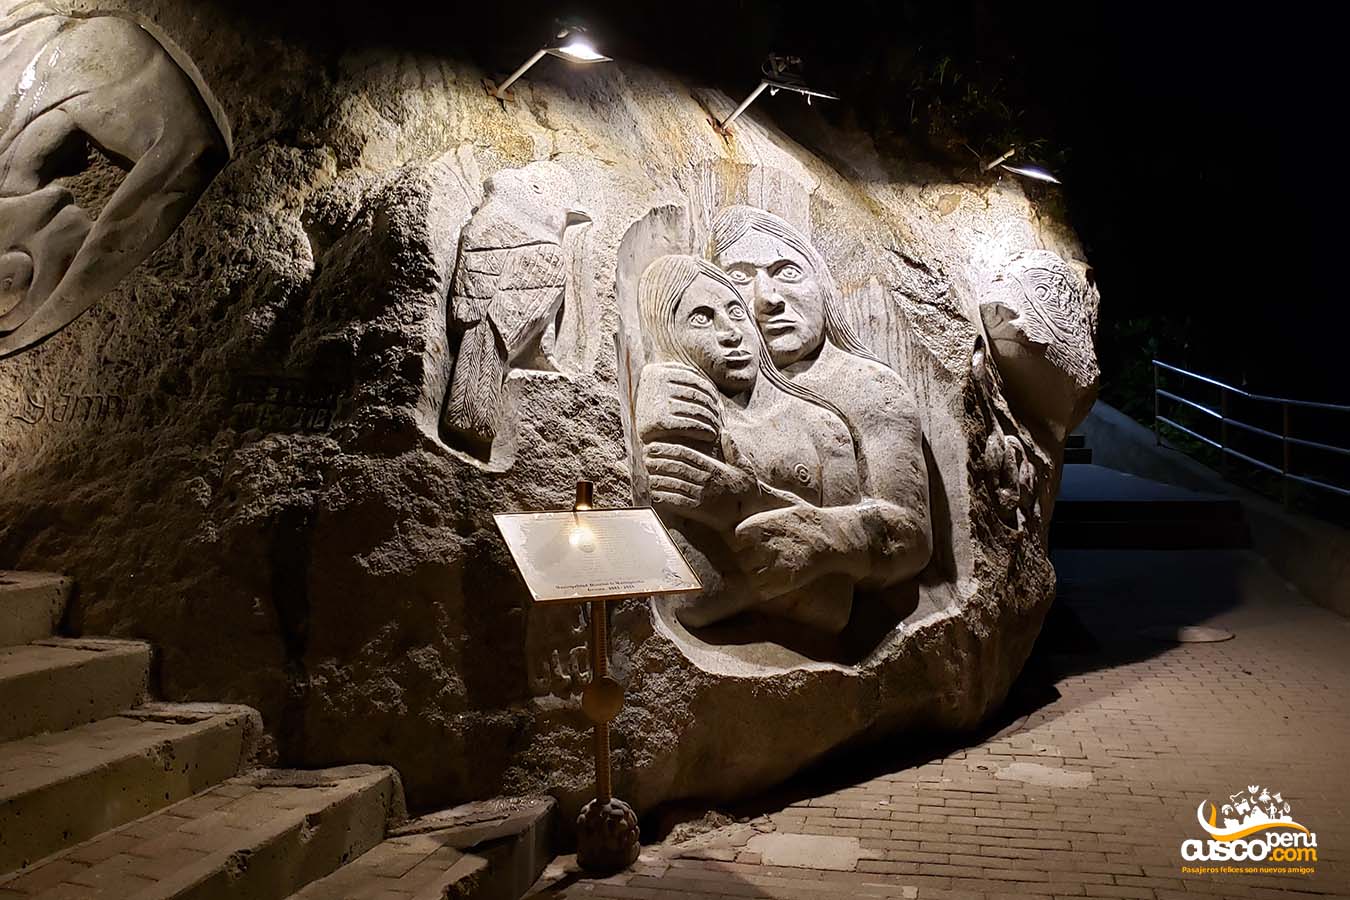 Escultura esculpida na cidade de Aguas Calientes. Fonte: Aguas Calientes